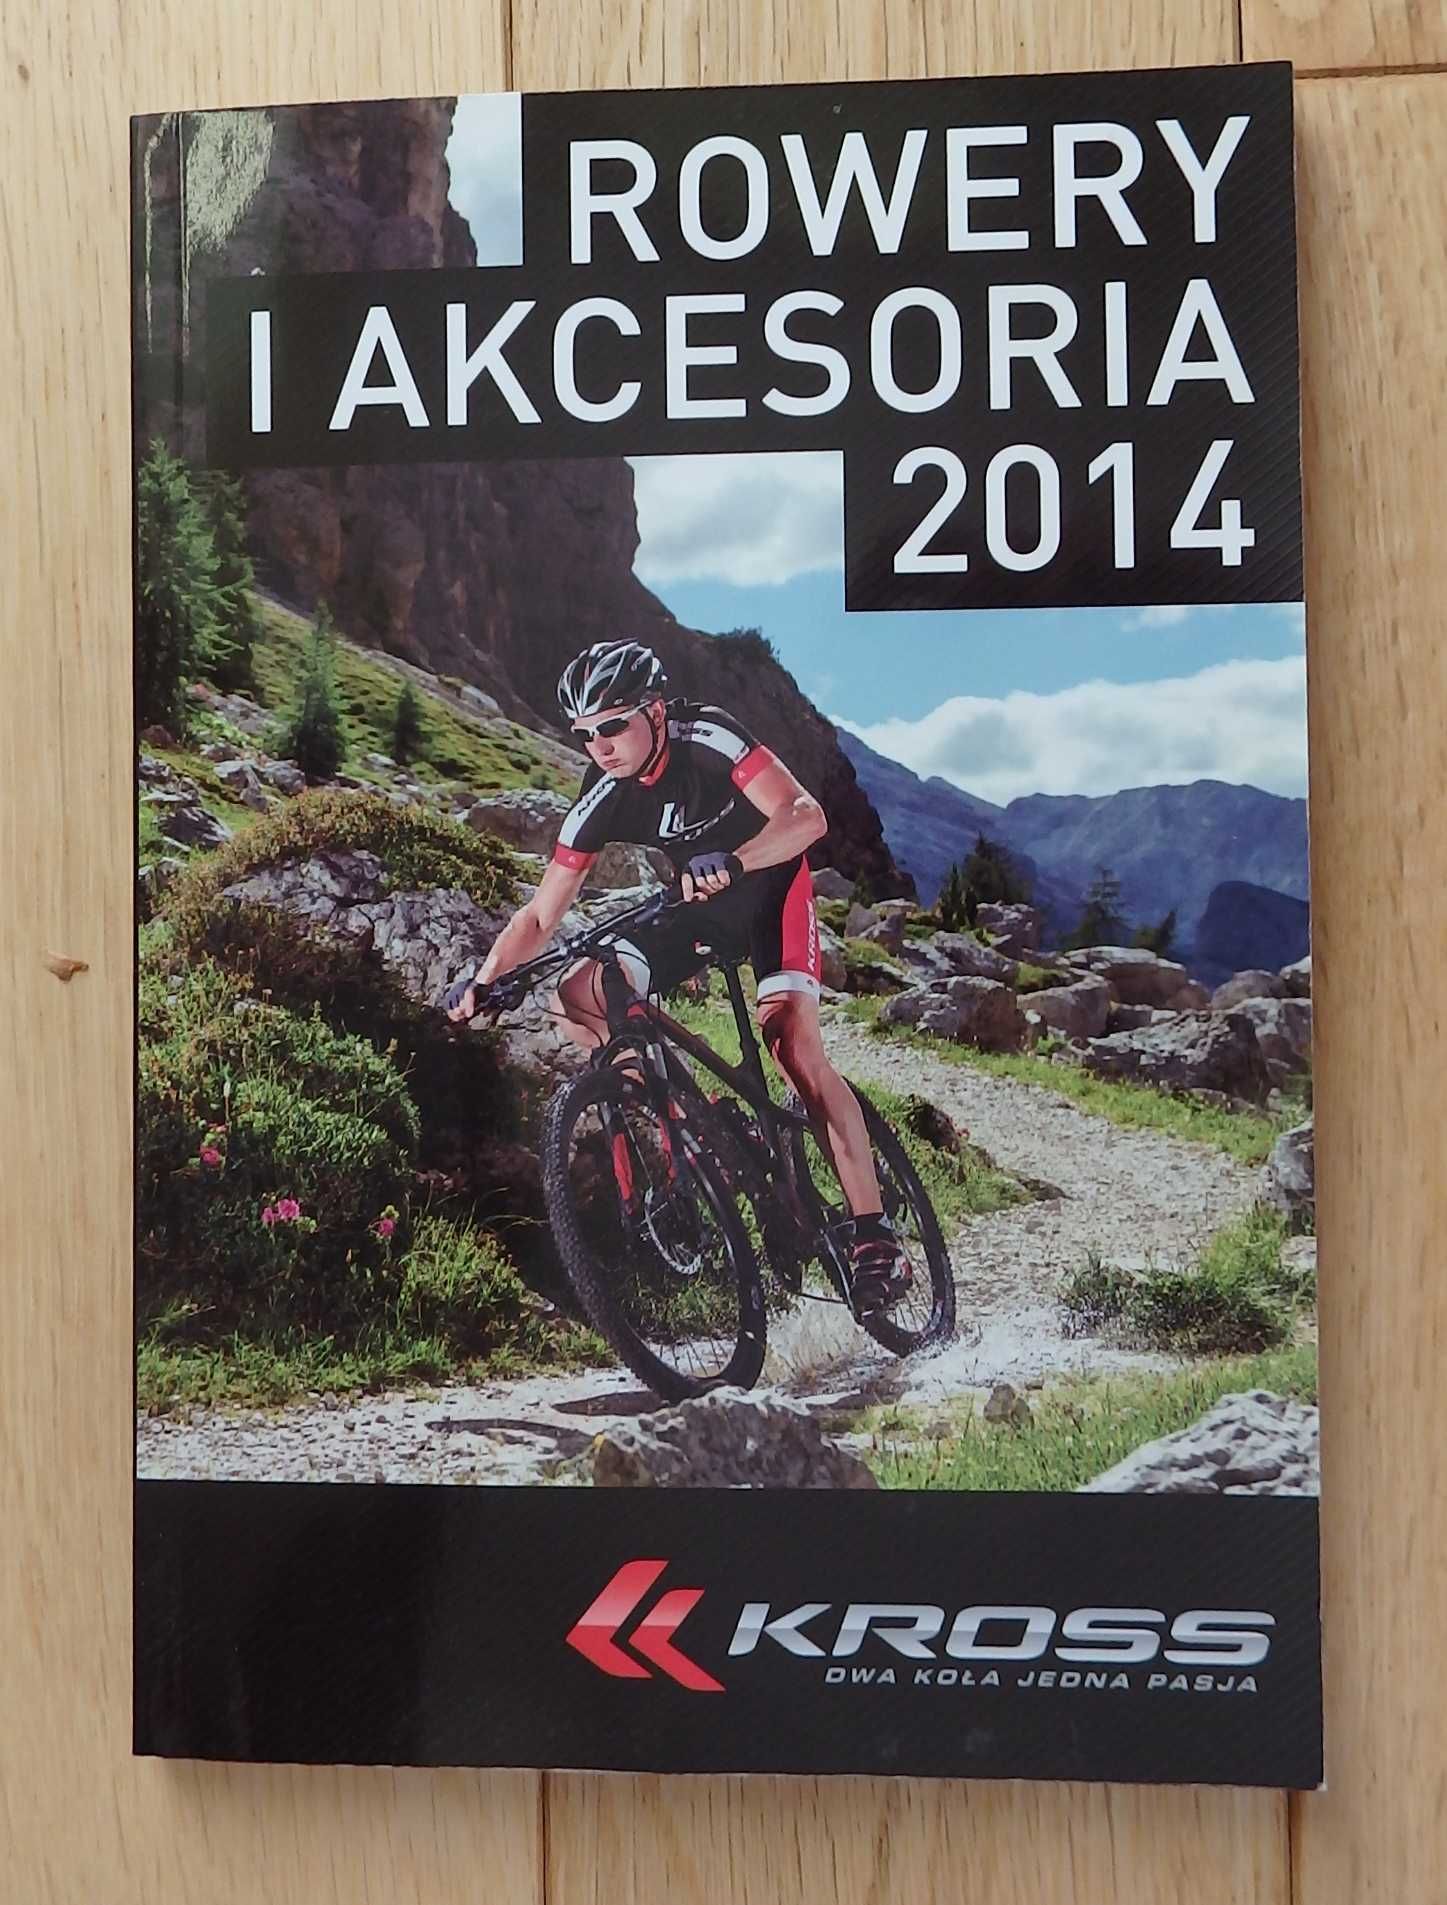 Katalog "Rower i akcesoria KROSS 2014"